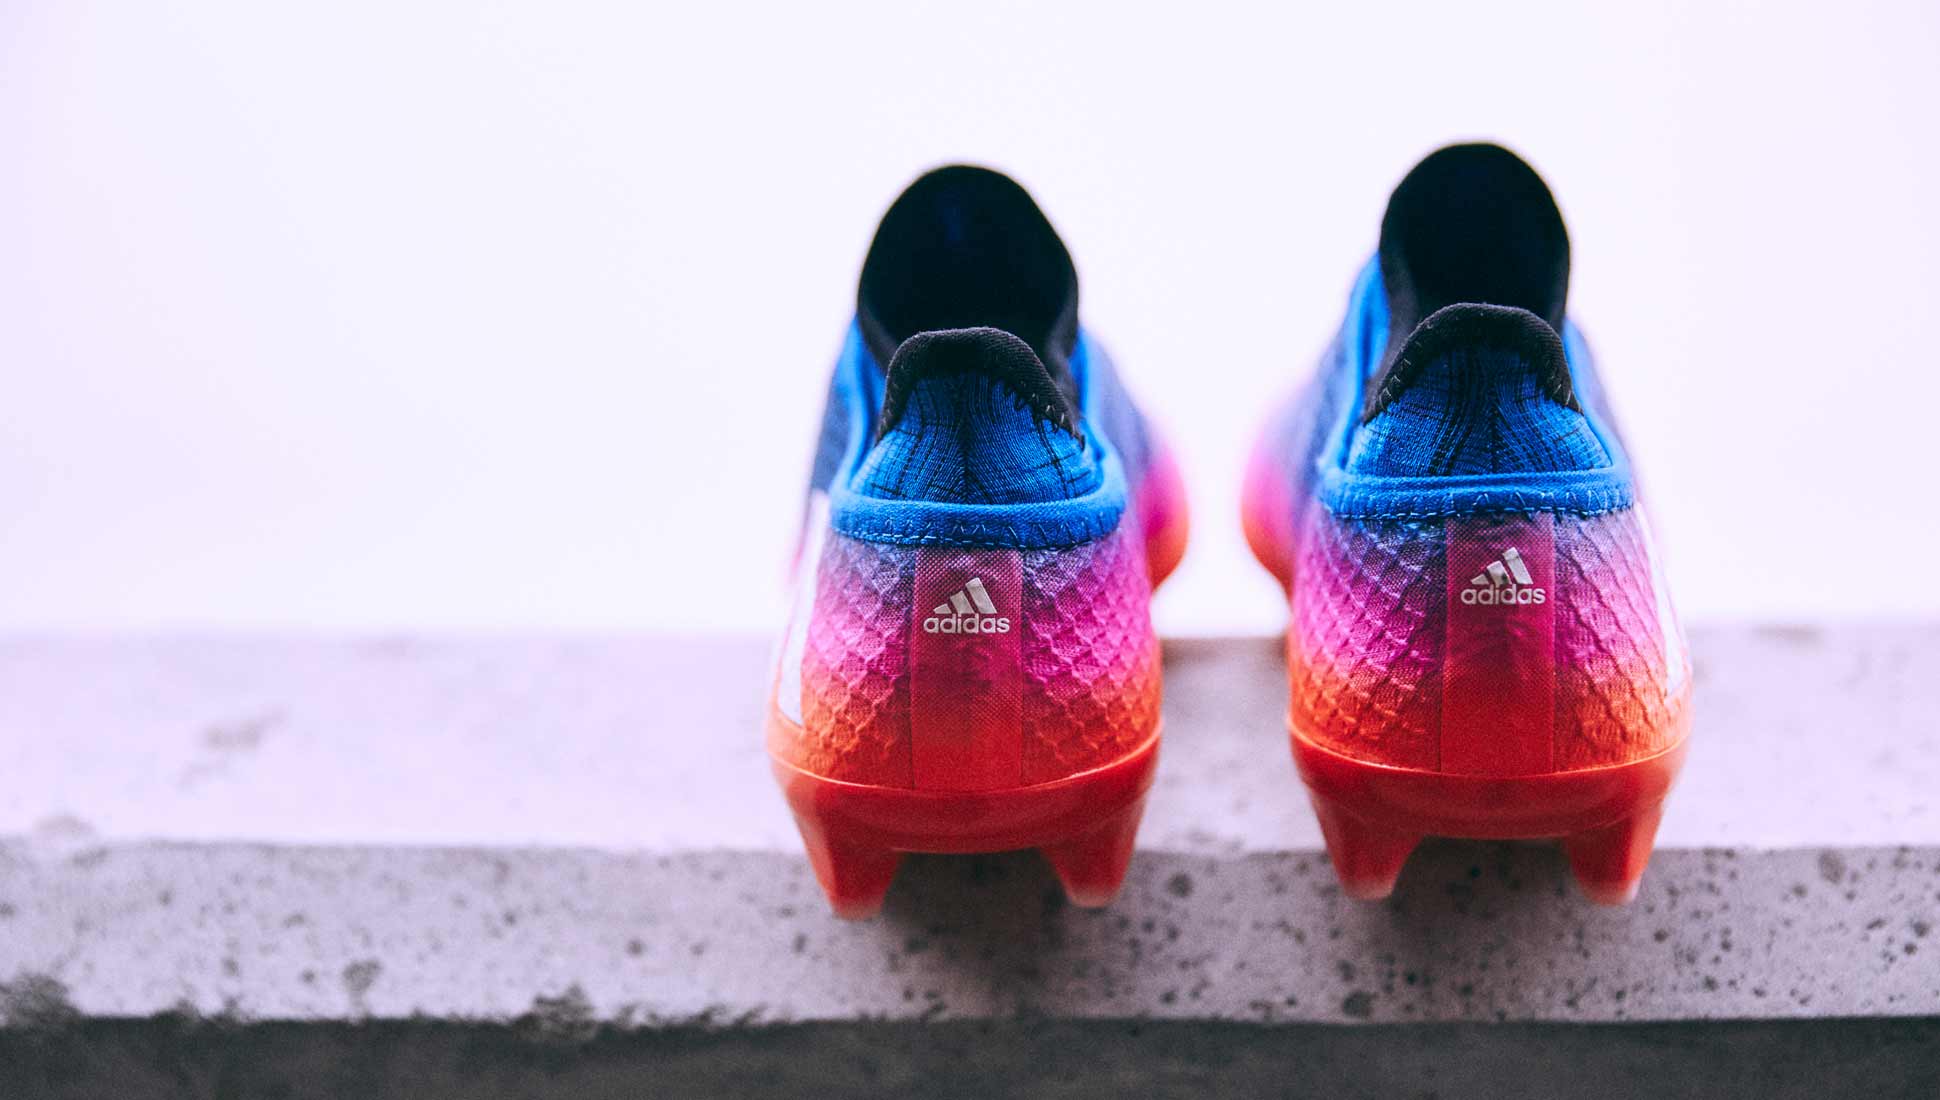 adidas Messi 16+ Pureagility Football Boots - SoccerBible